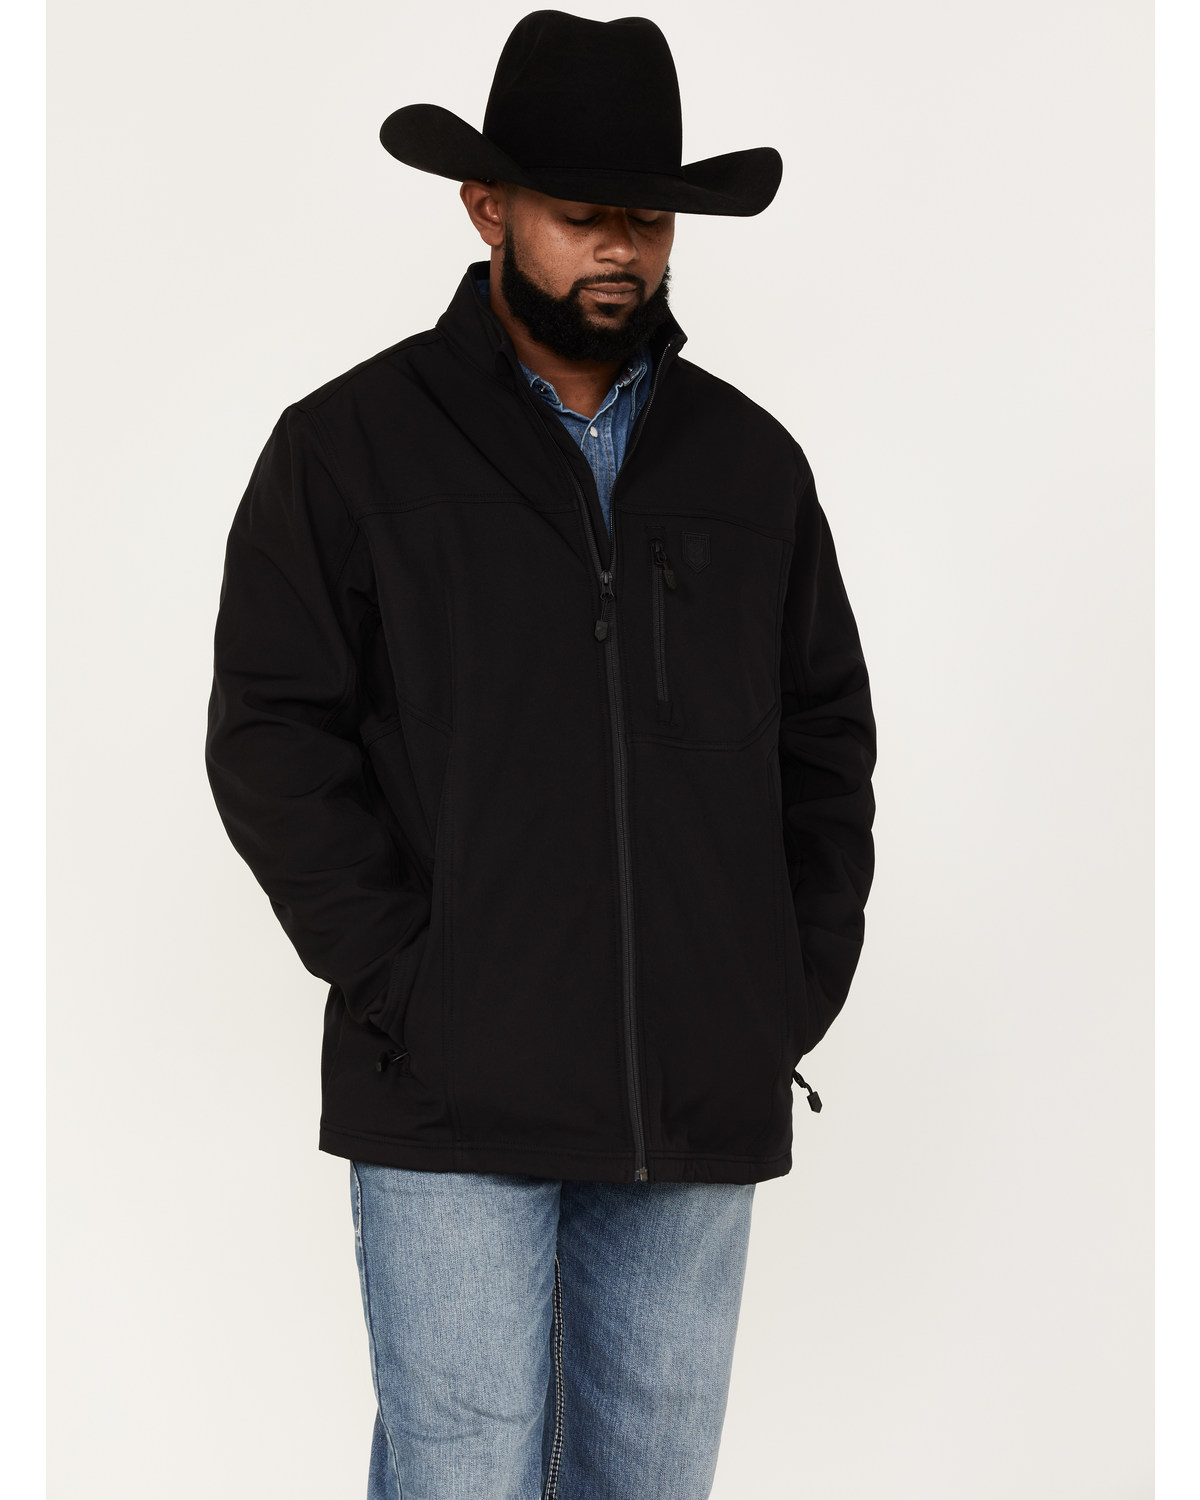 RANK 45® Men's Myrtis Concealed Carry Softshell Jacket - Big & Tall